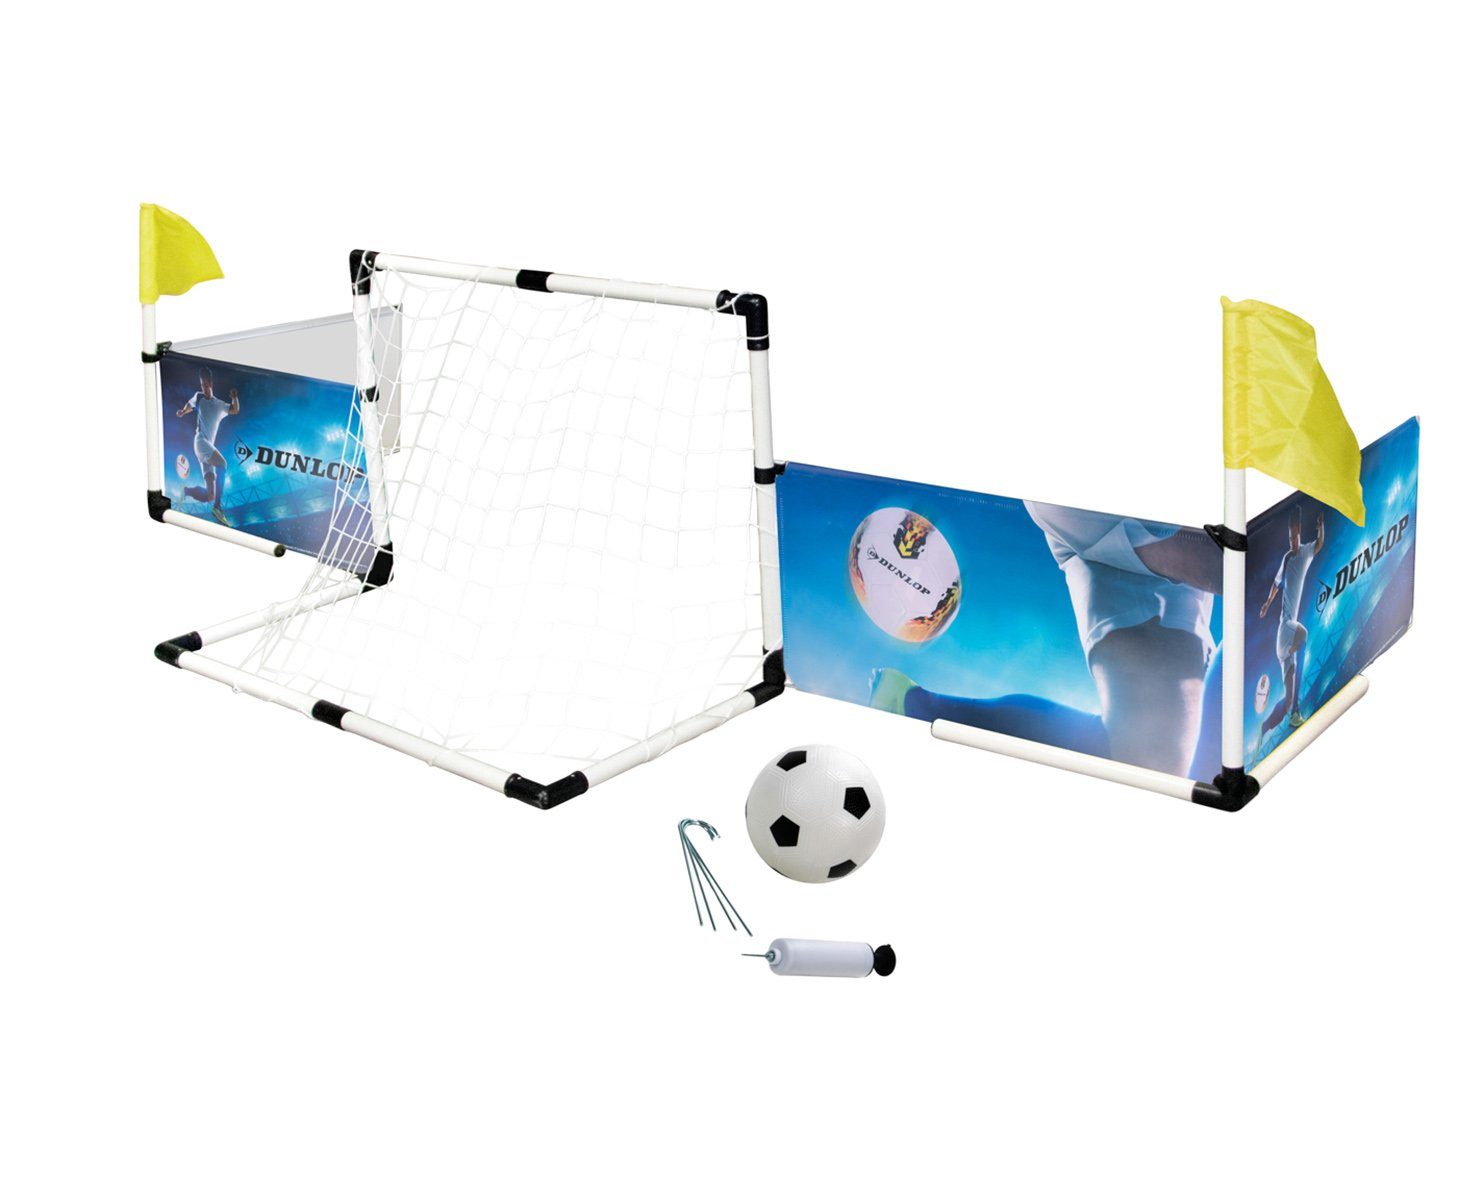 Fußball, mit Adapter), Goal Fußballtor mit Eckfahnen, Football Dunlop Ballpumpe Begrenzungsbanden Fußballtor (2